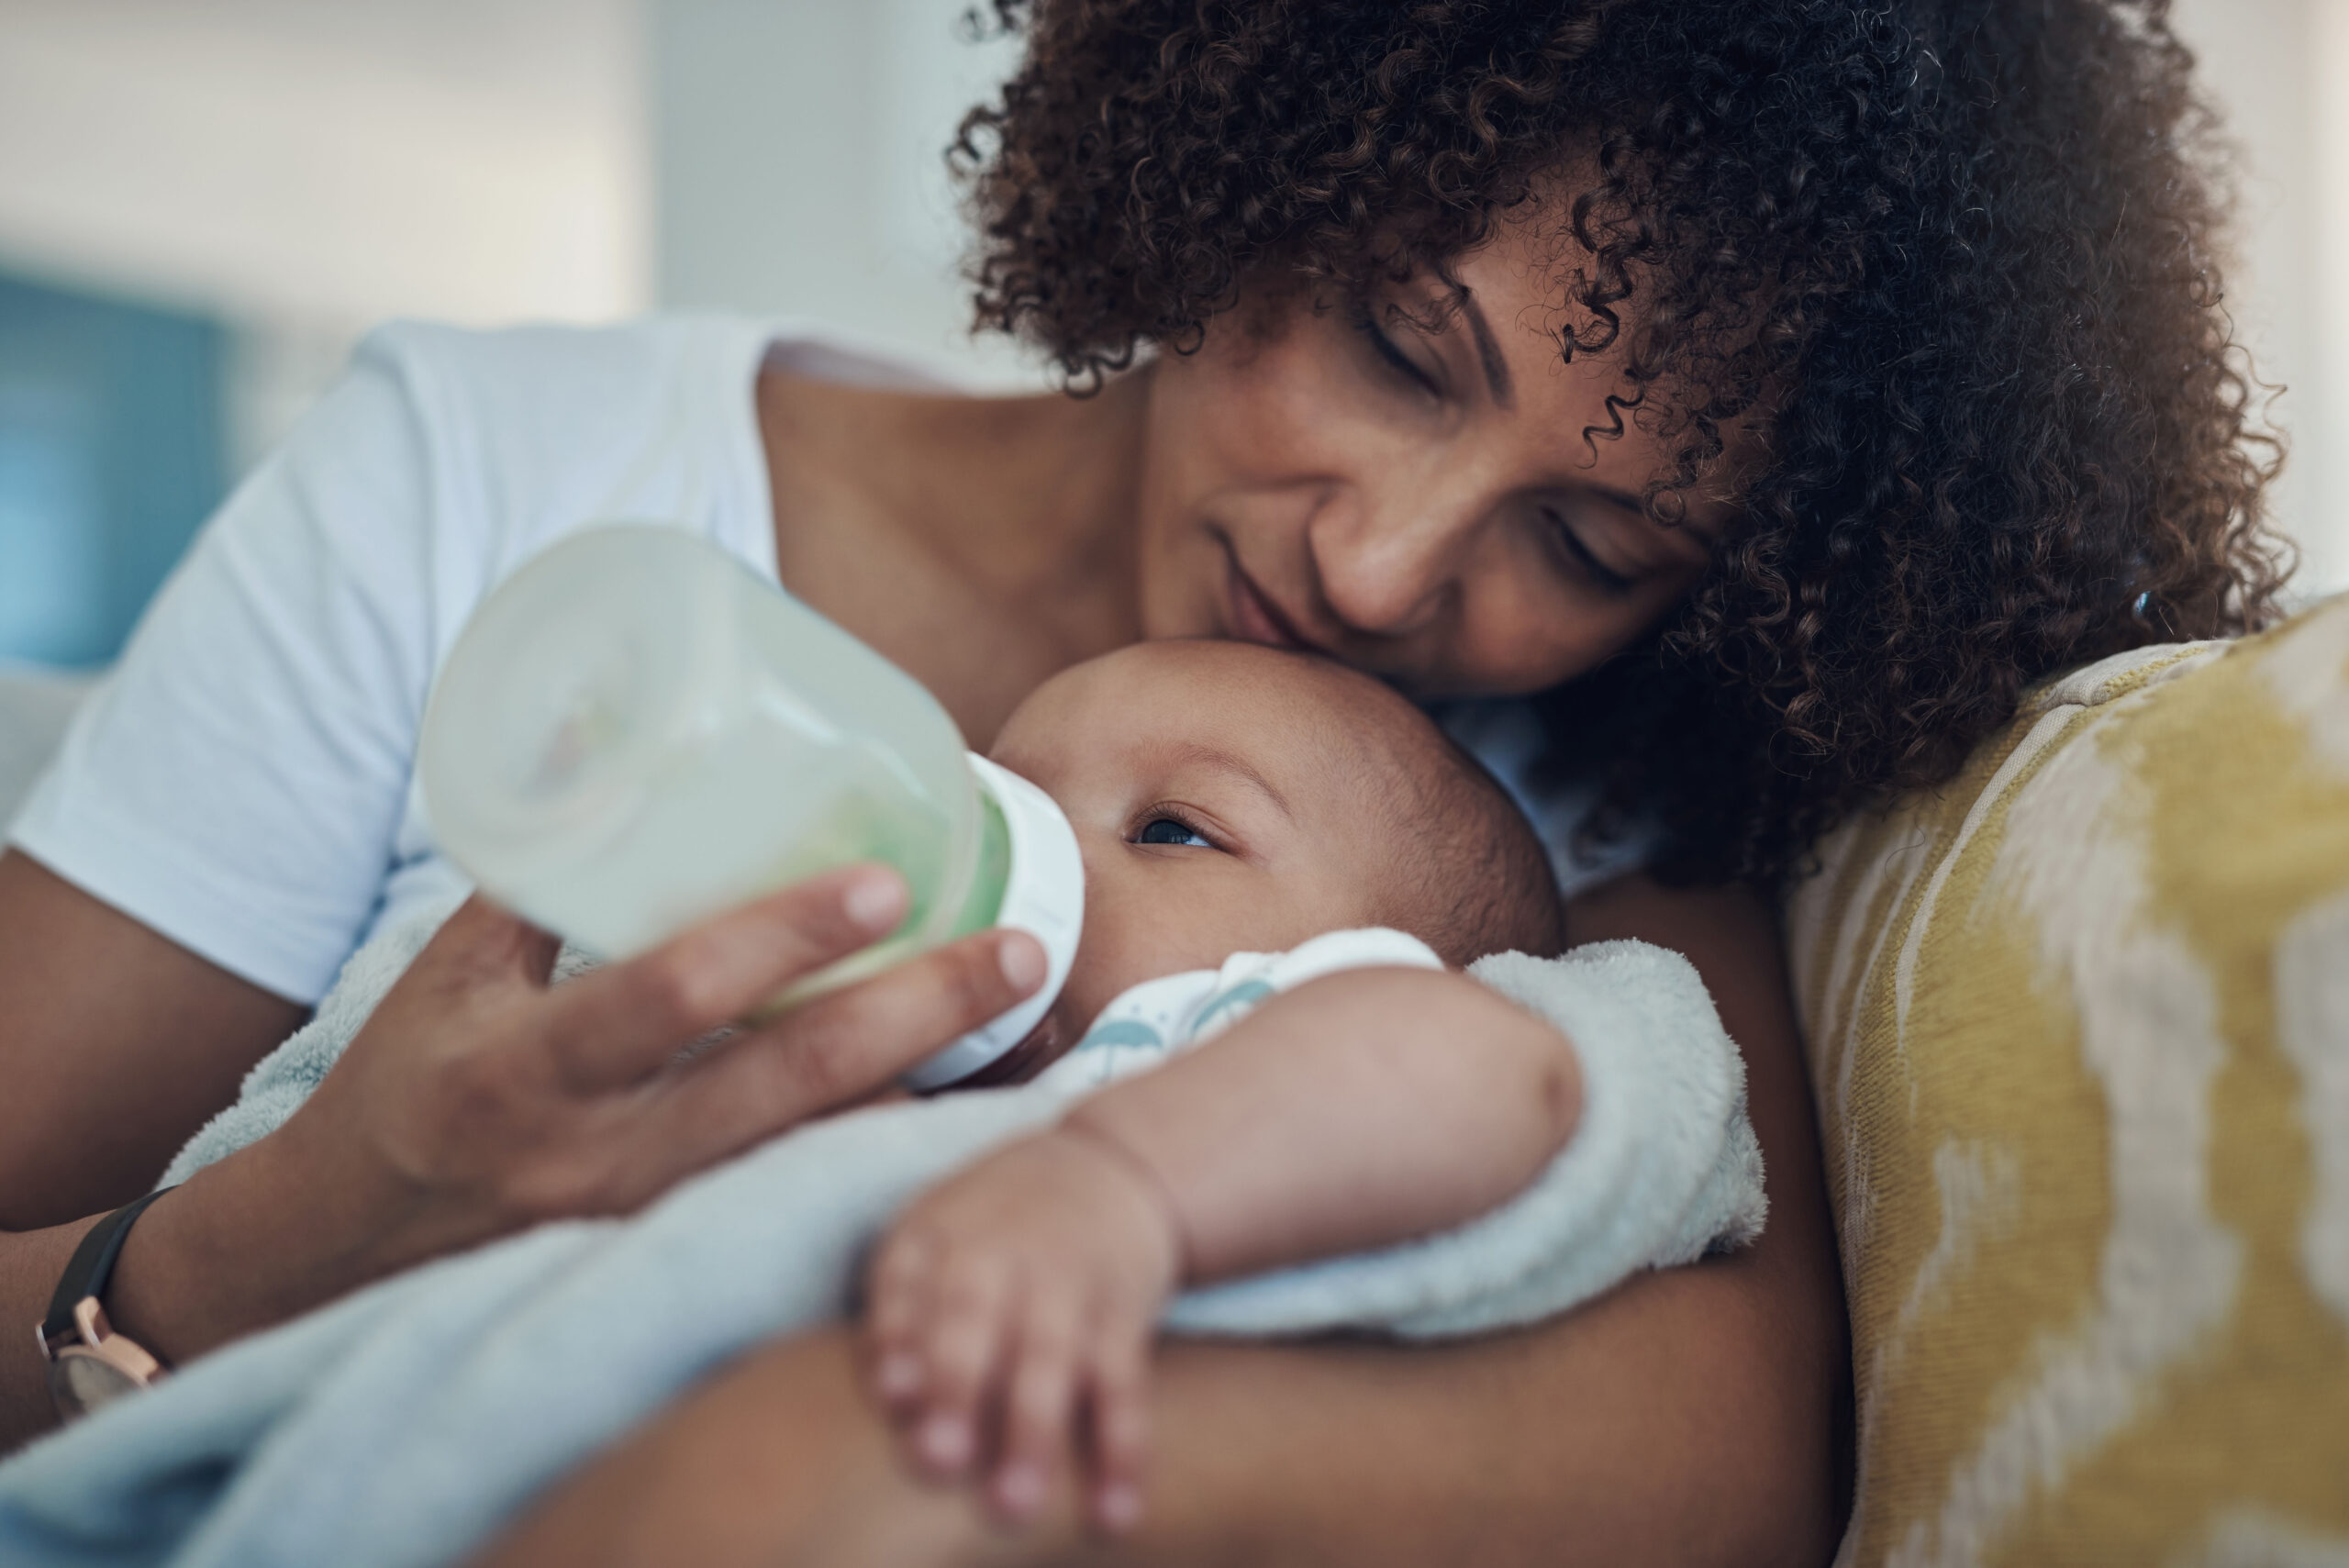 Newborn Care Tips